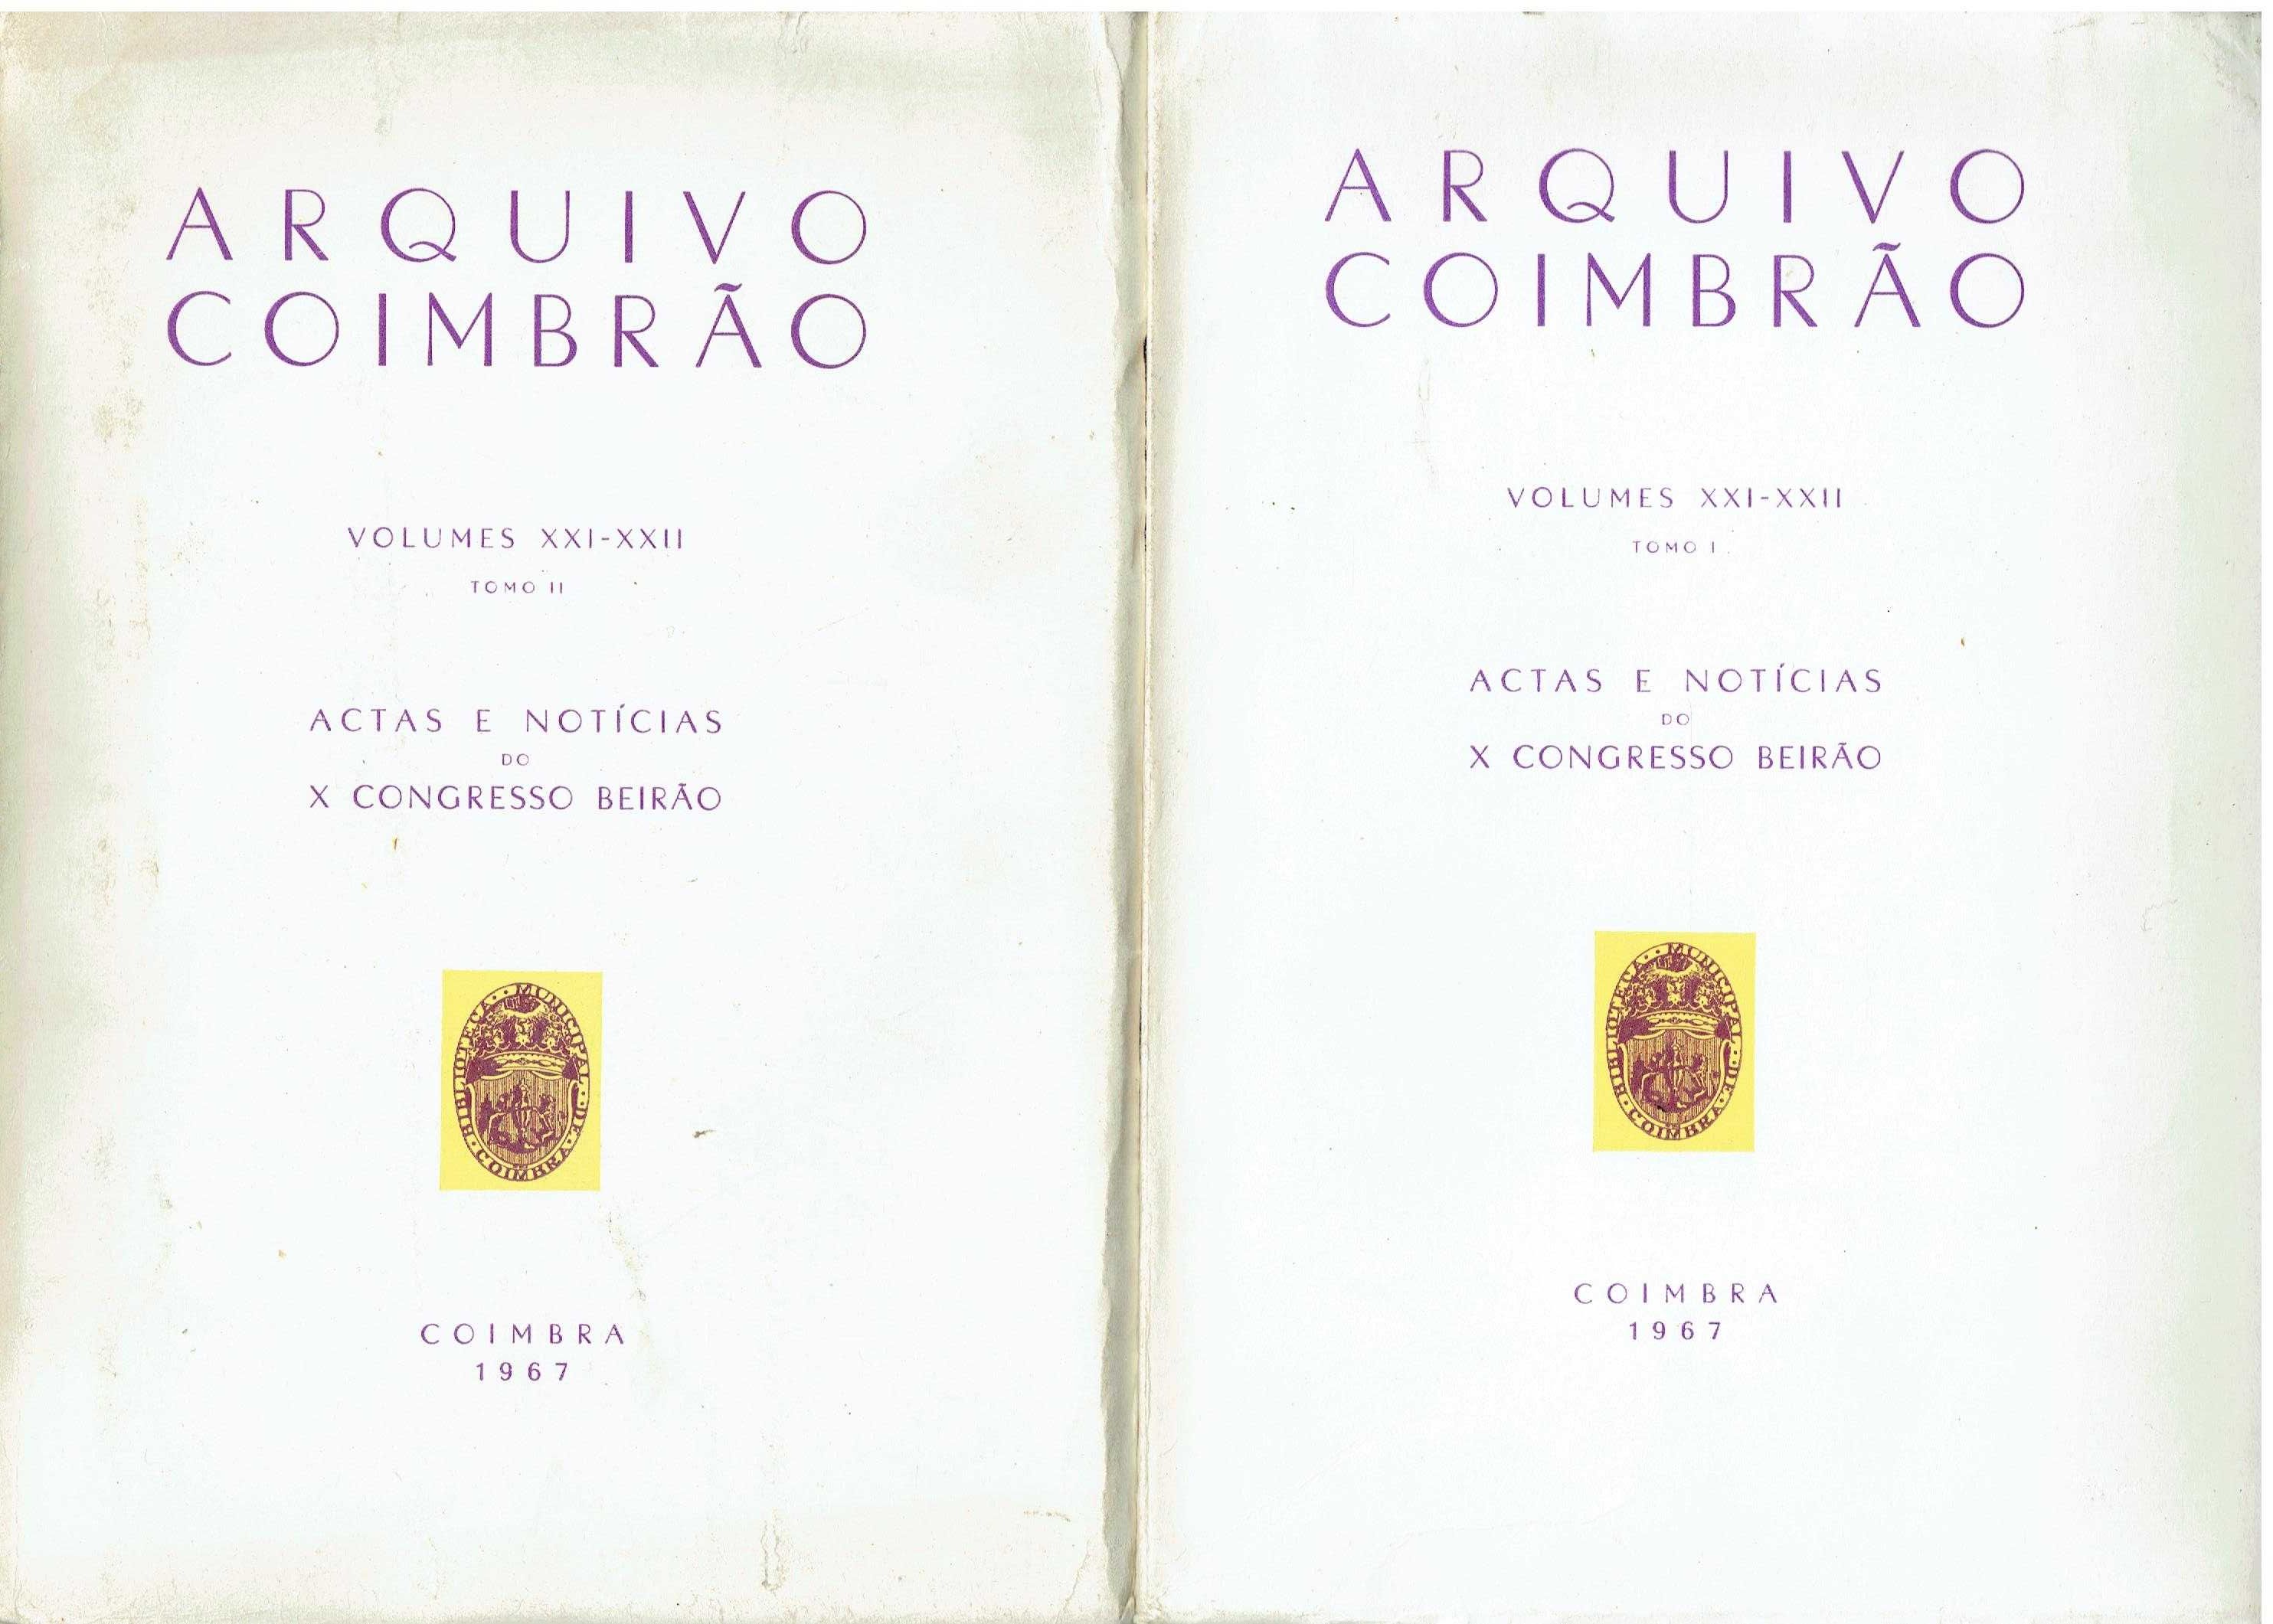 6001

Arquivo Coimbrão
Volumes XXI-XXII